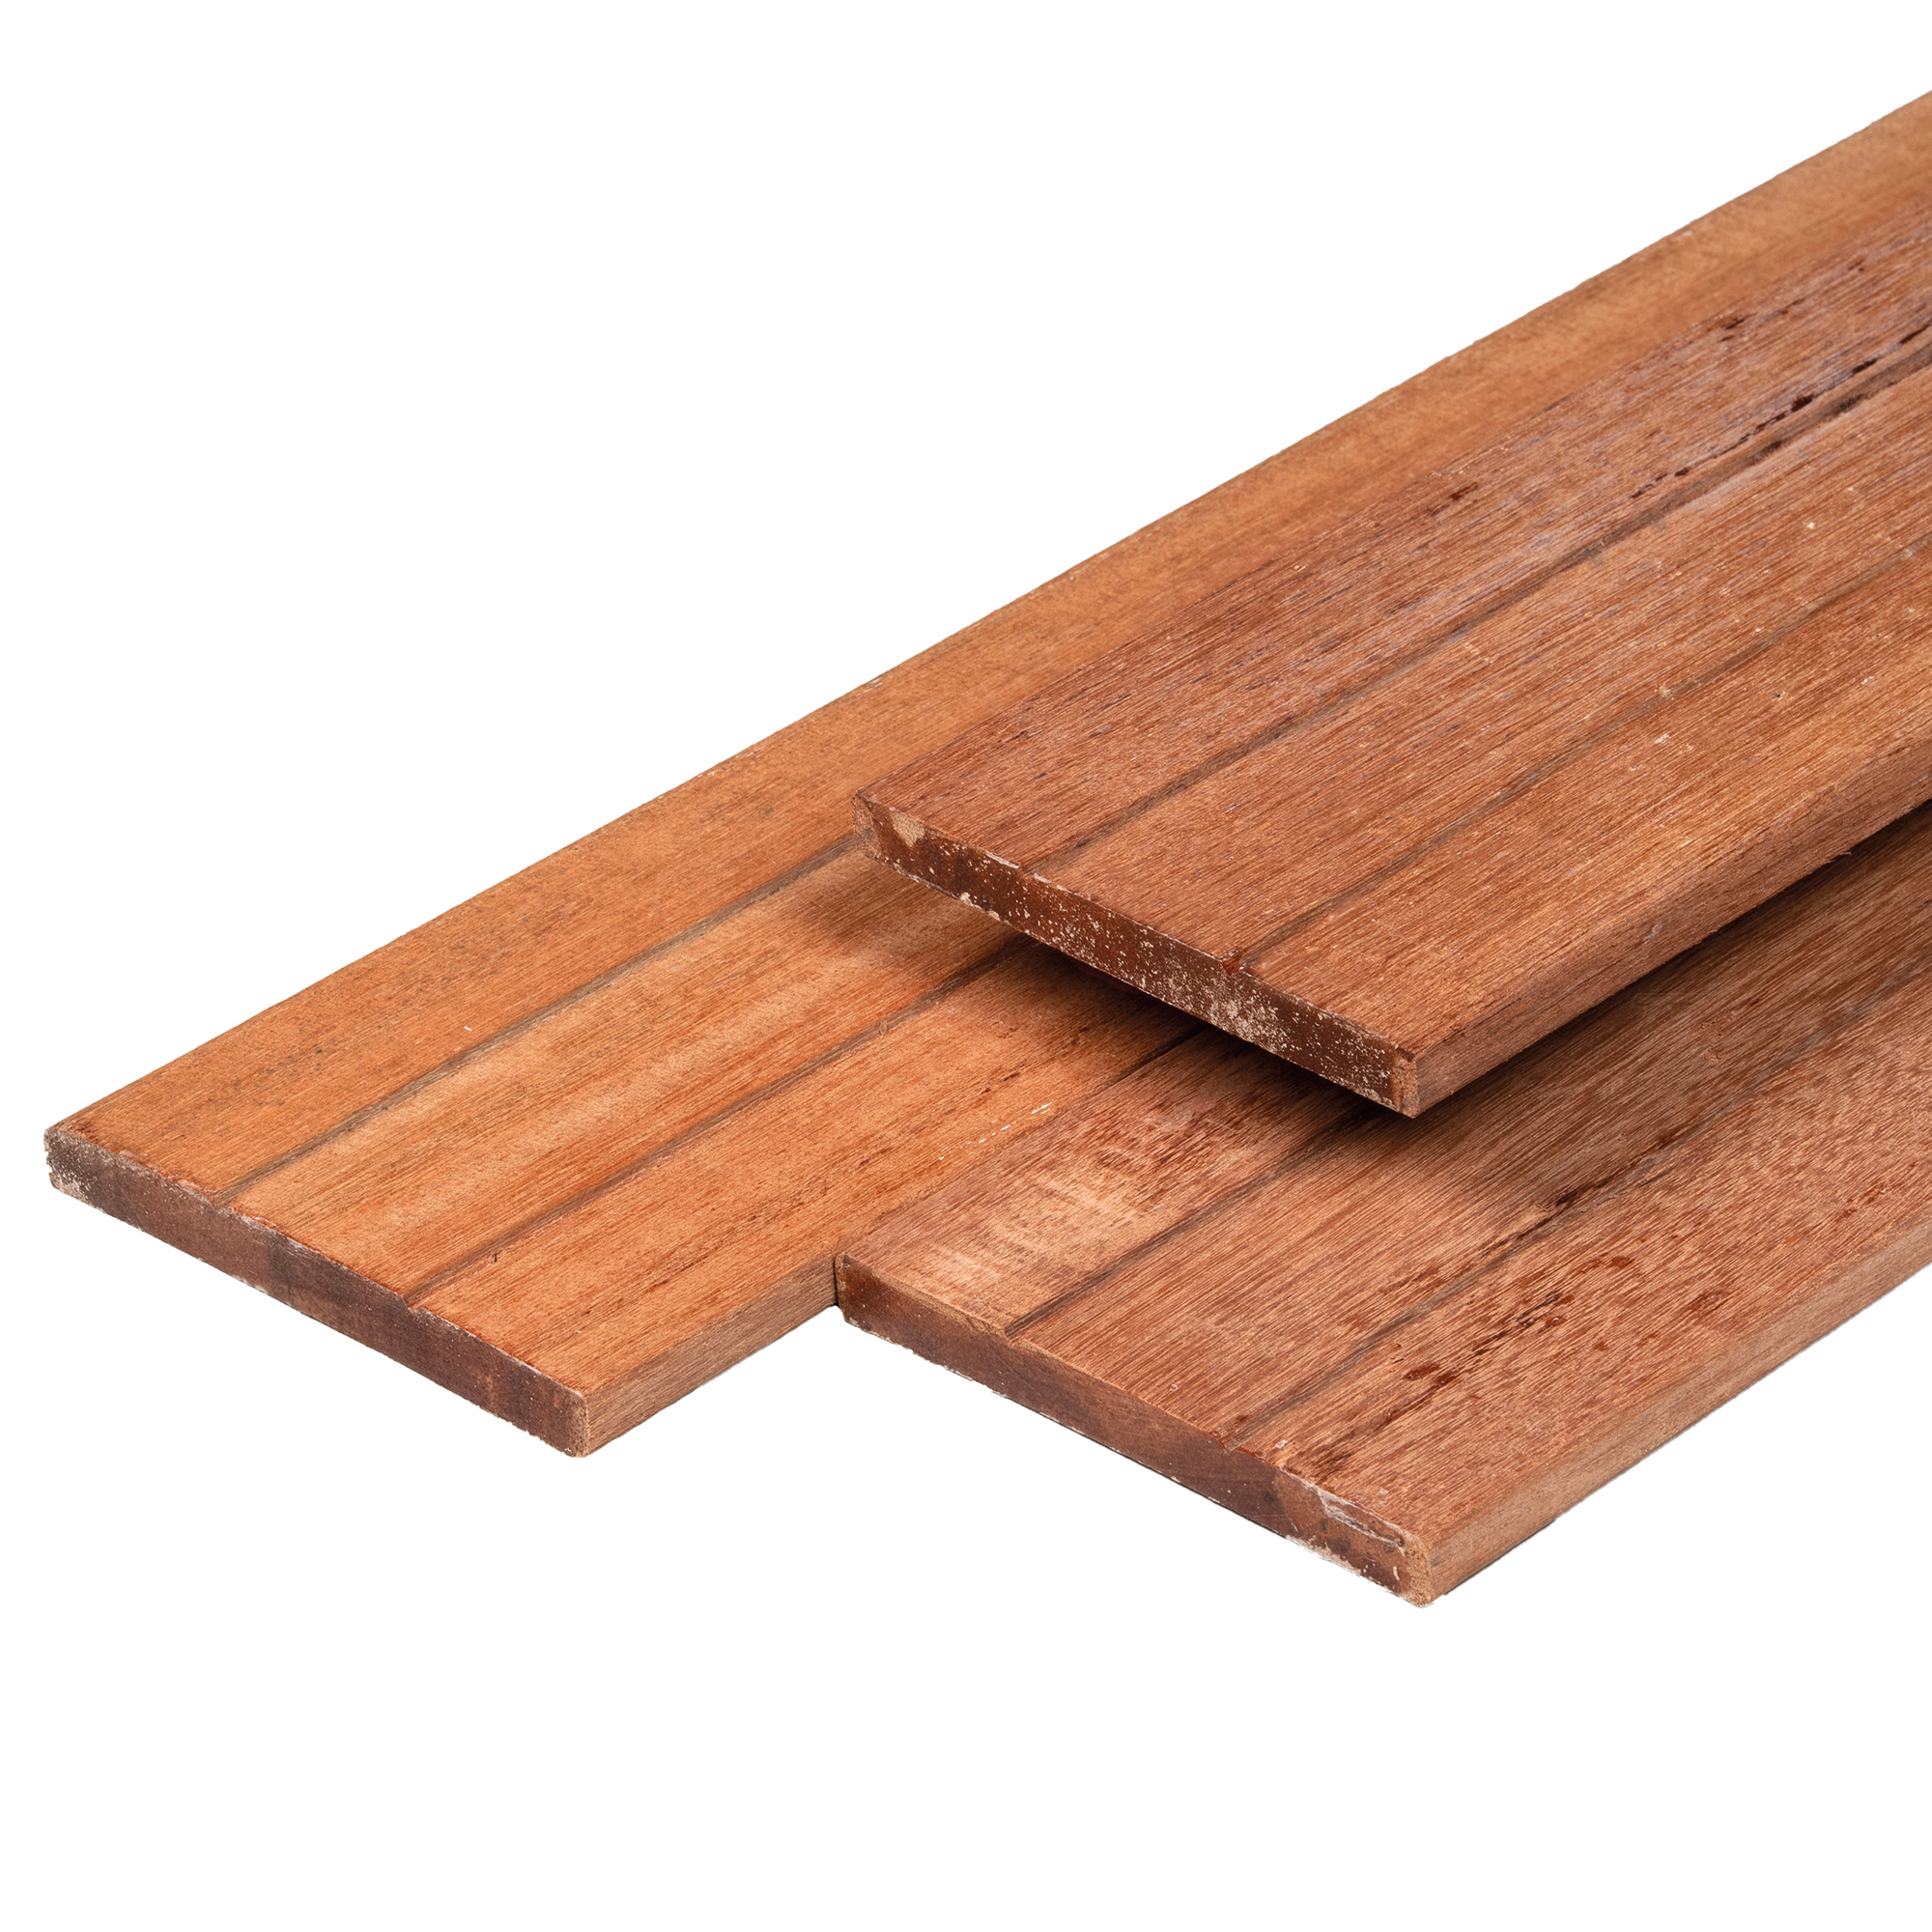 Plank hardhout 1.4x14.0x195cm